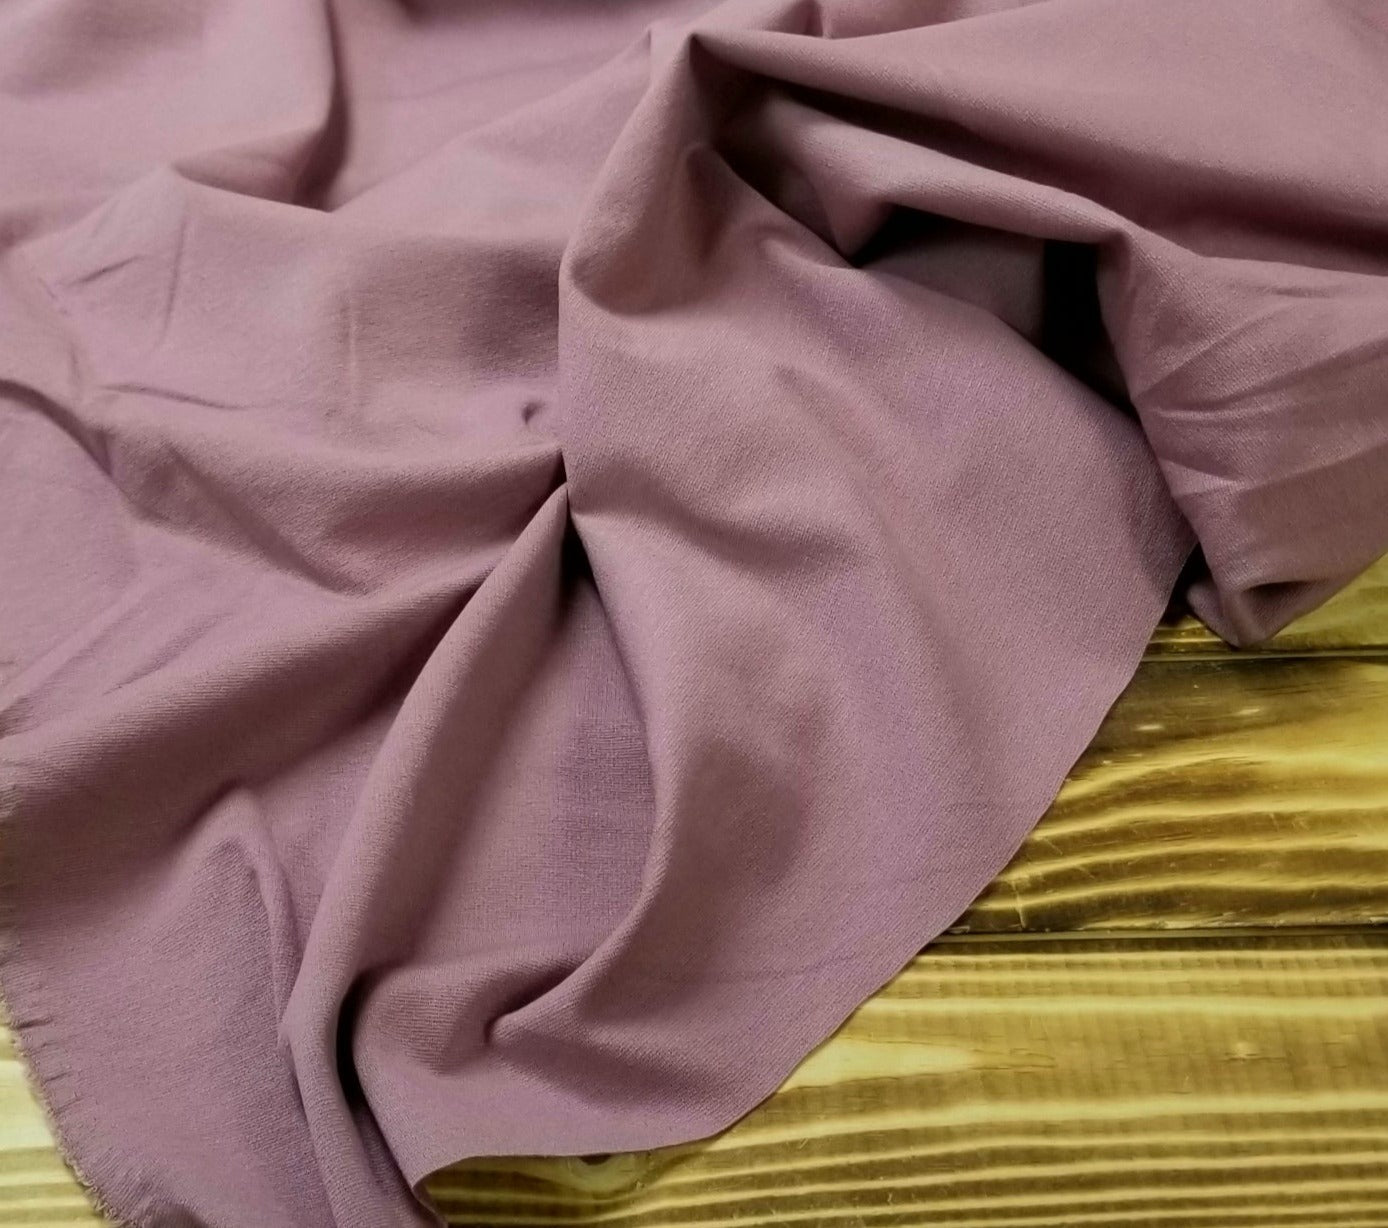 Light Lavender Medium Weight Rayon Spandex Jersey Knit Fabric 